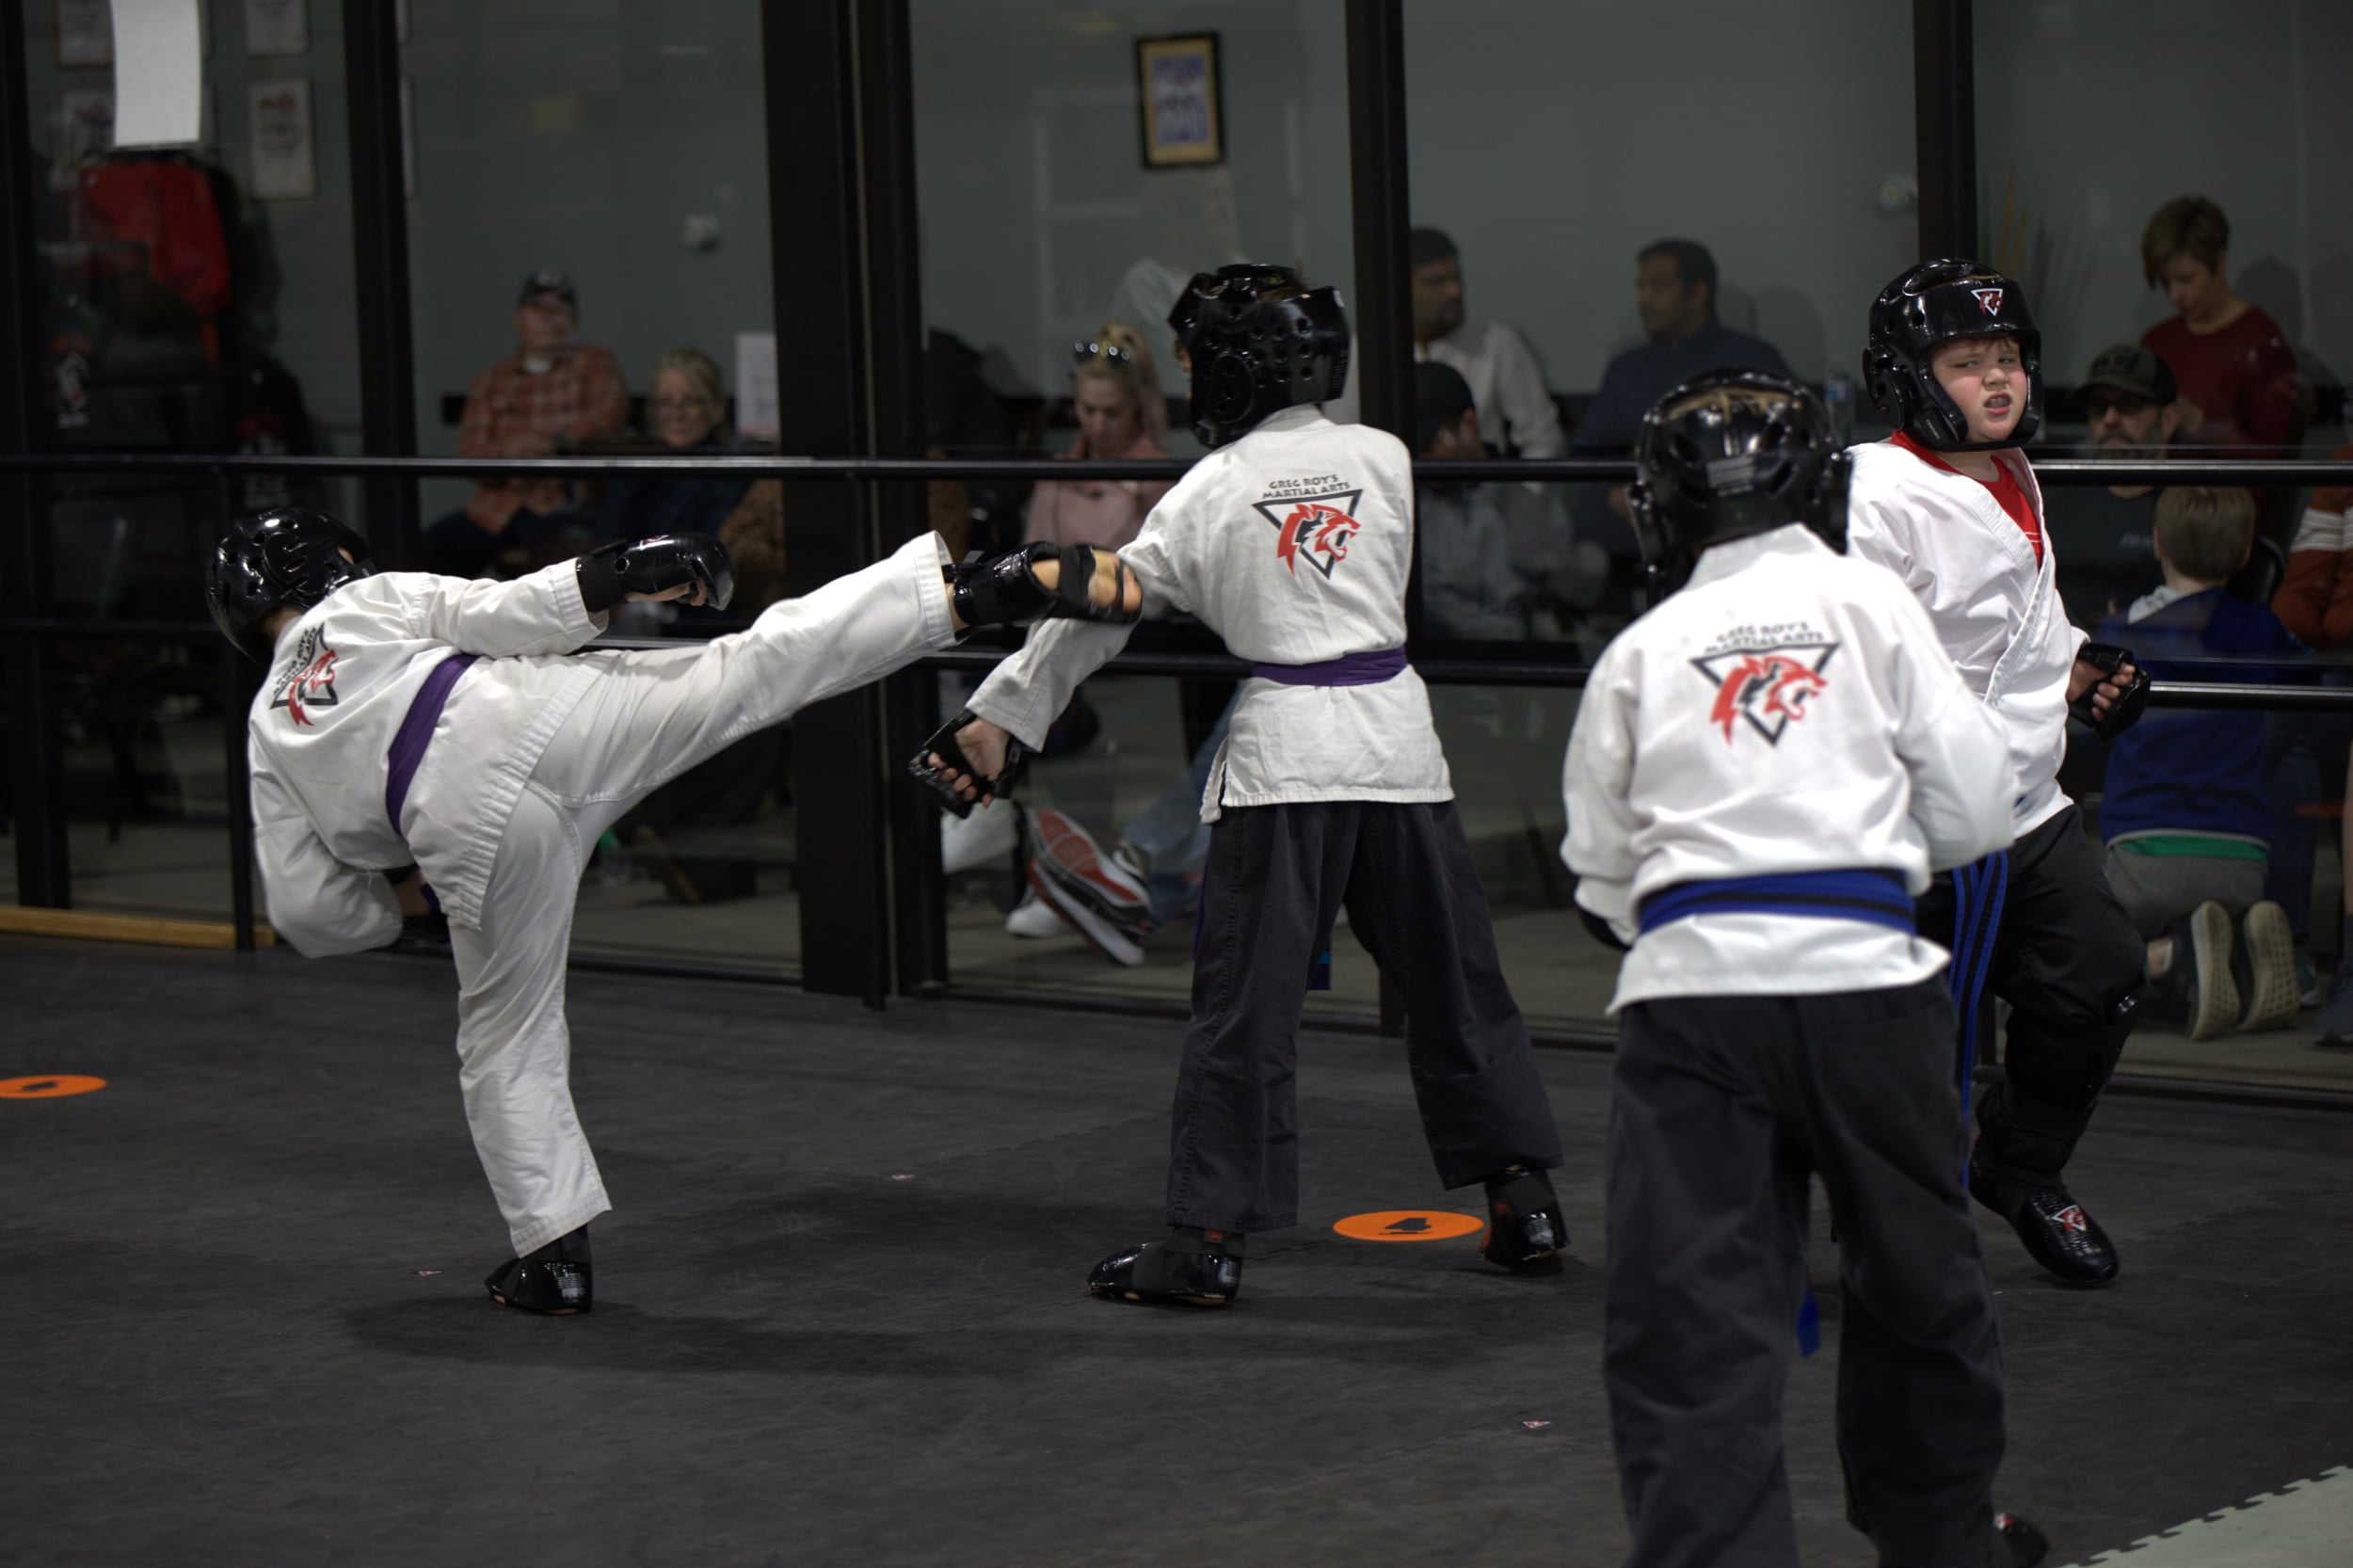 Greg Roy's Martial Arts Academy Home School Program